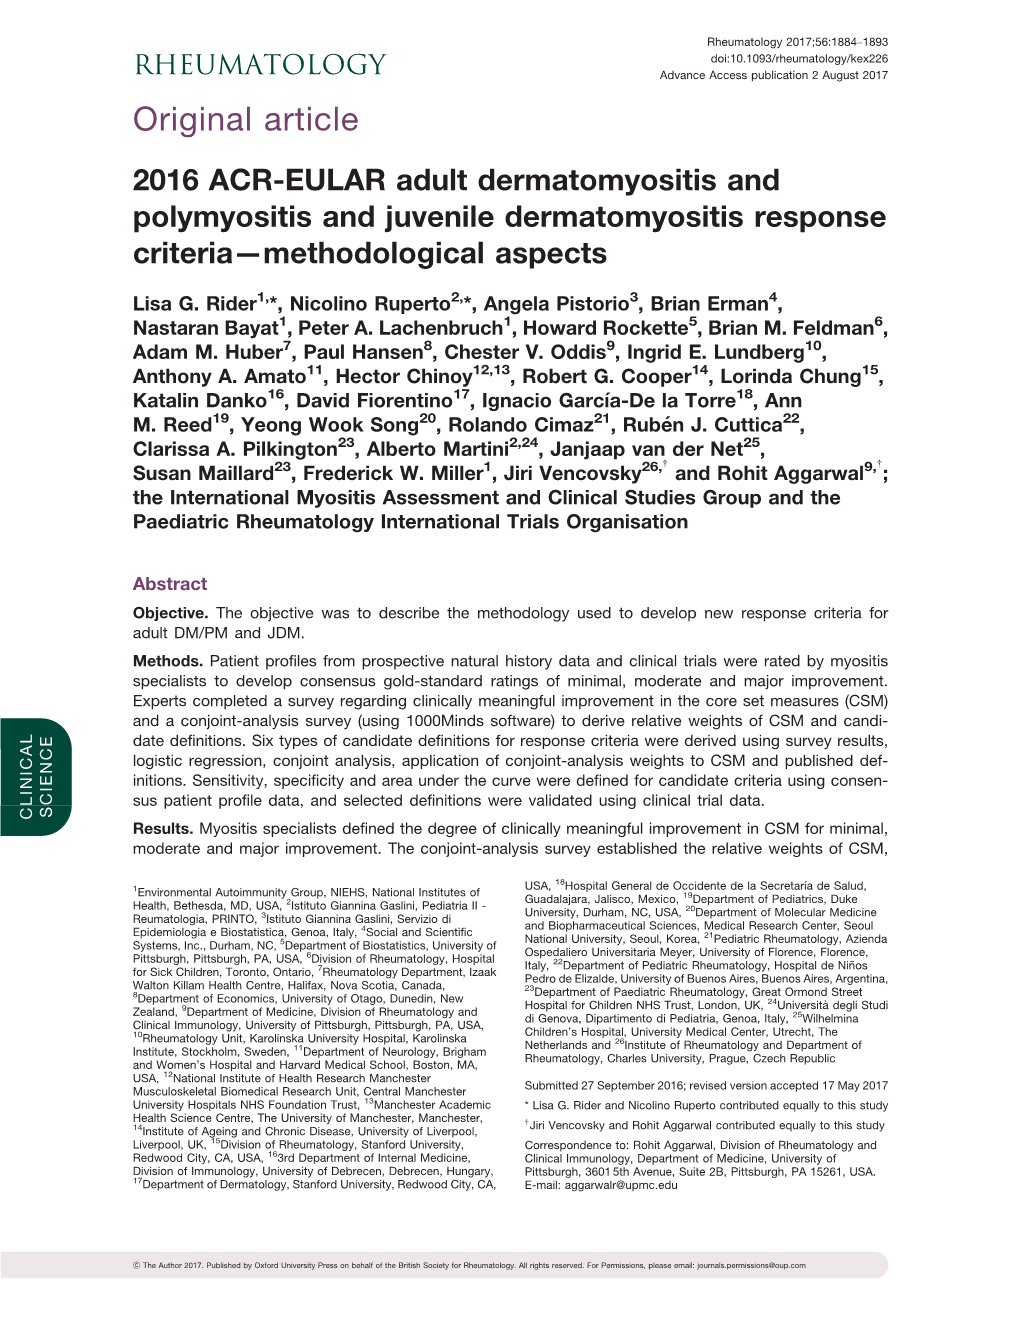 Original Article 2016 ACR-EULAR Adult Dermatomyositis and Polymyositis and Juvenile Dermatomyositis Response Criteria—Methodological Aspects